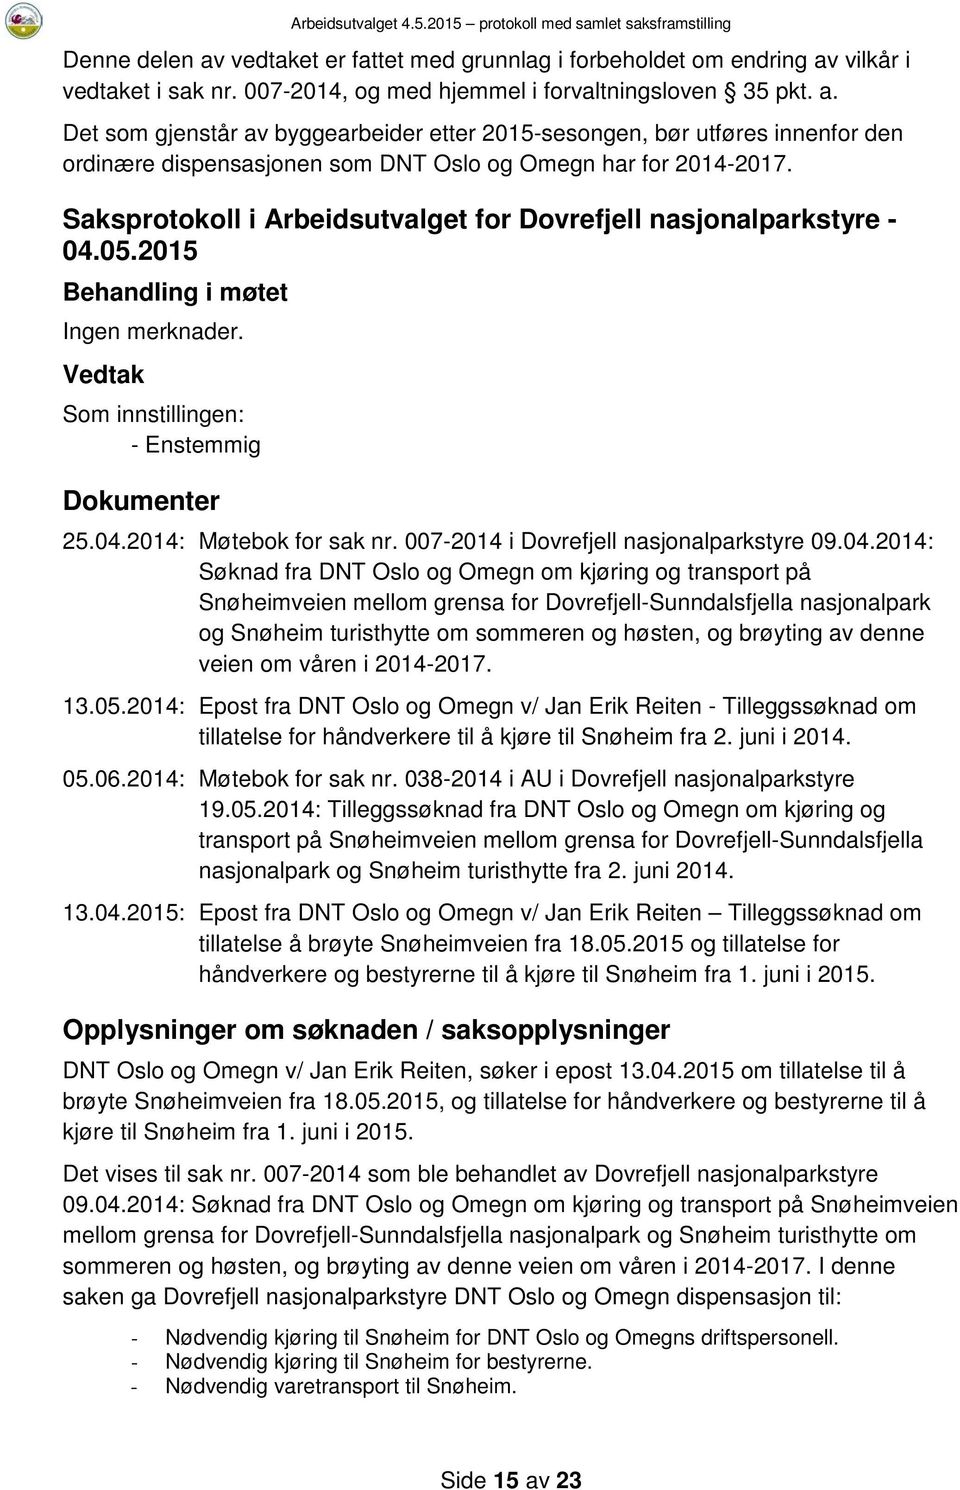 007-2014 i Dovrefjell nasjonalparkstyre 09.04.